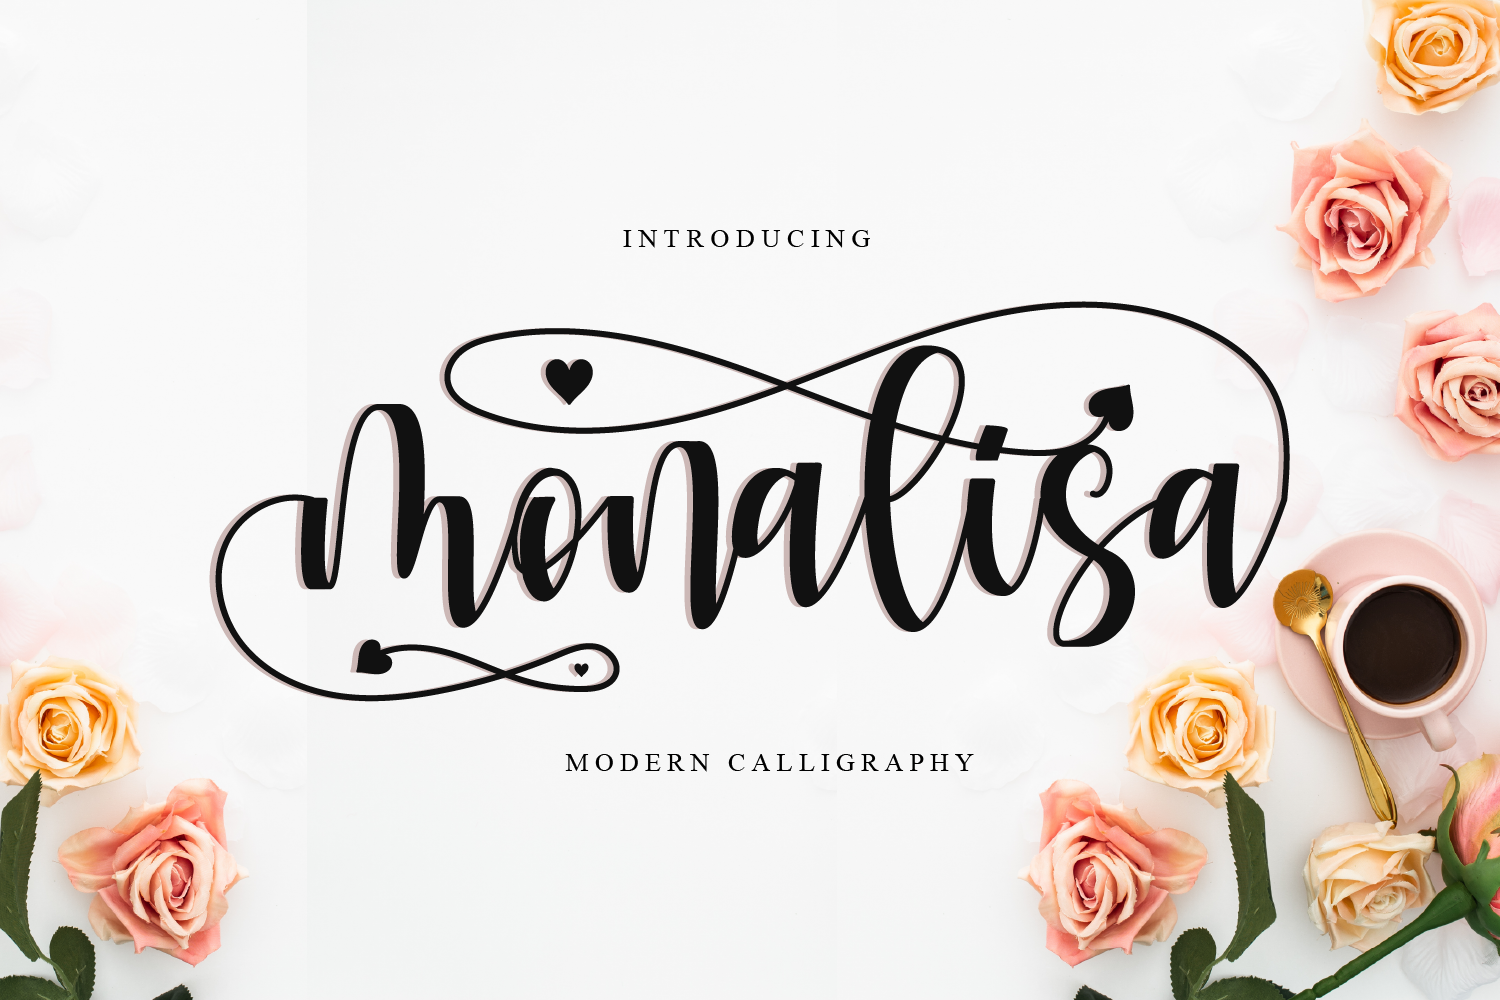 Monalisa Free Font